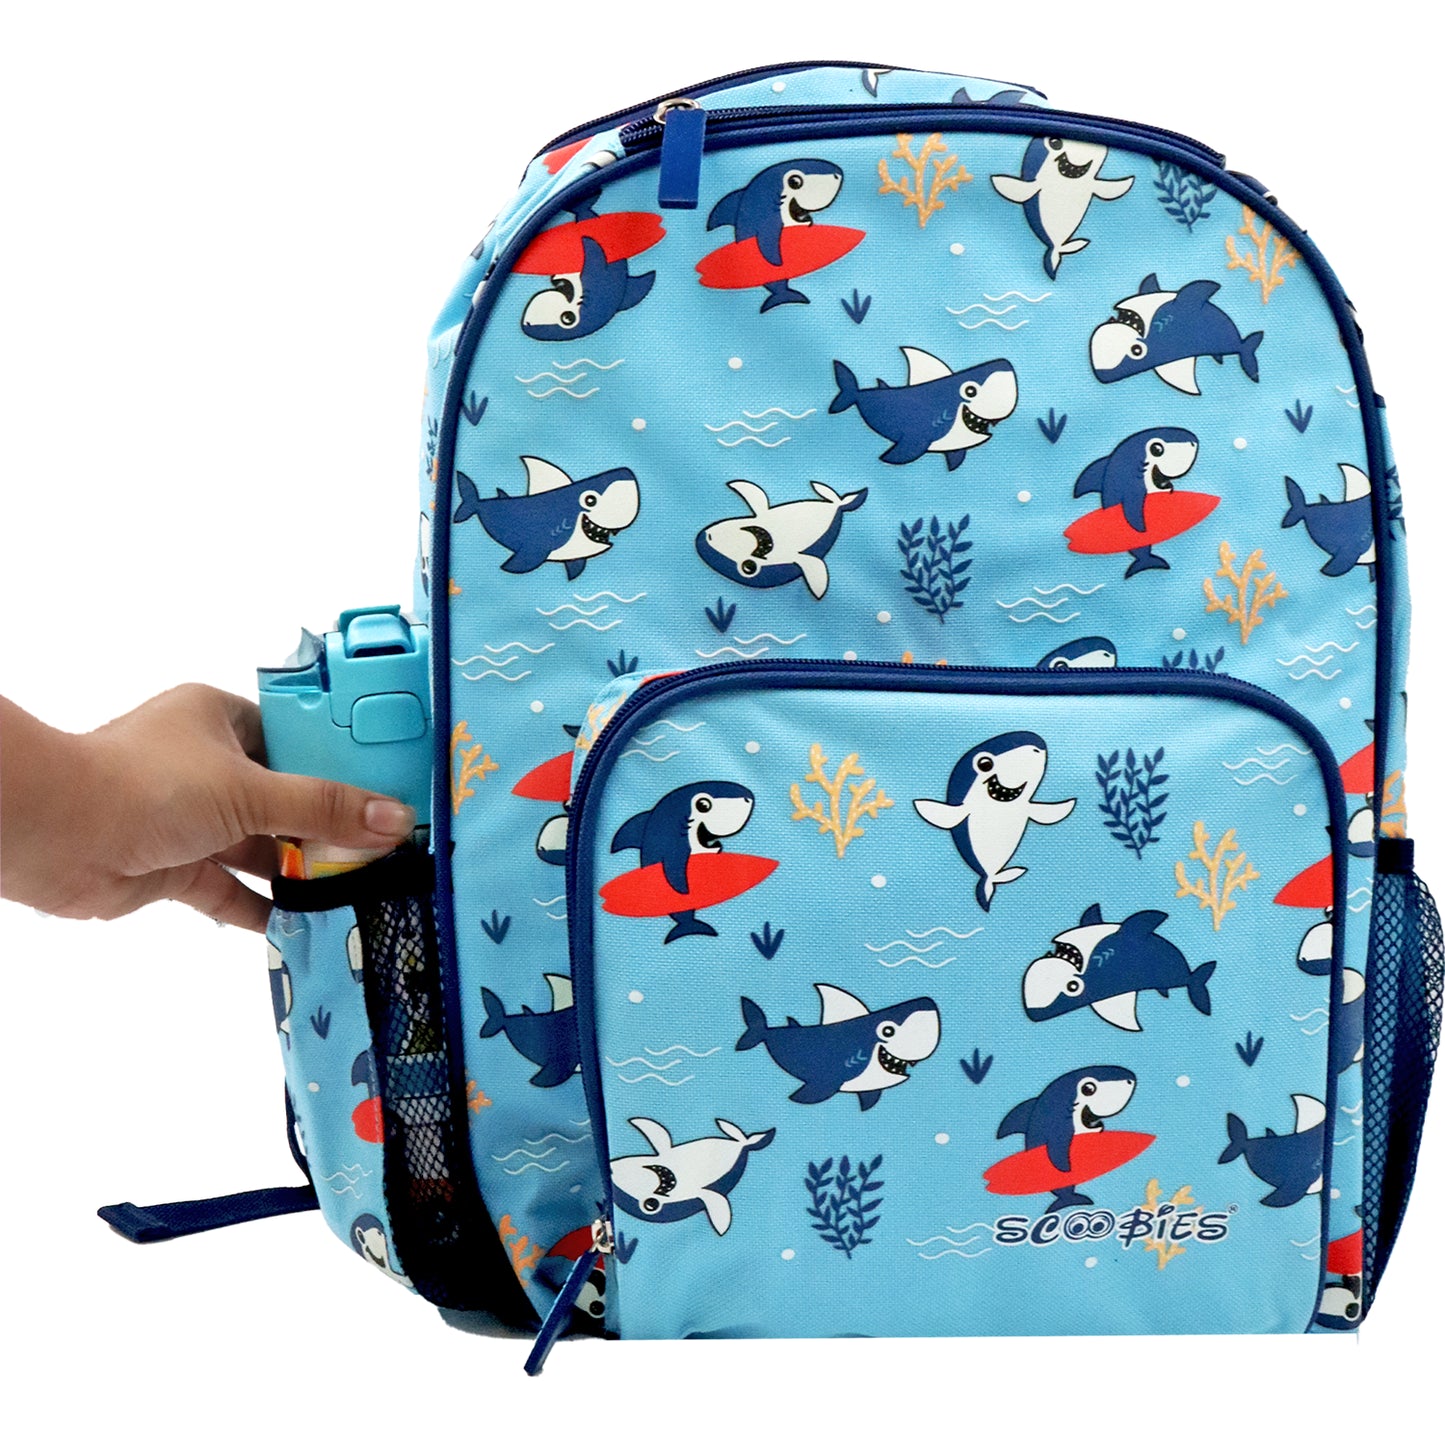 Shark Glow-in-the-Dark Bag  |  With Stationery Pocket  |  Internal Laptop Sleeve | Cool Blue Shark Design